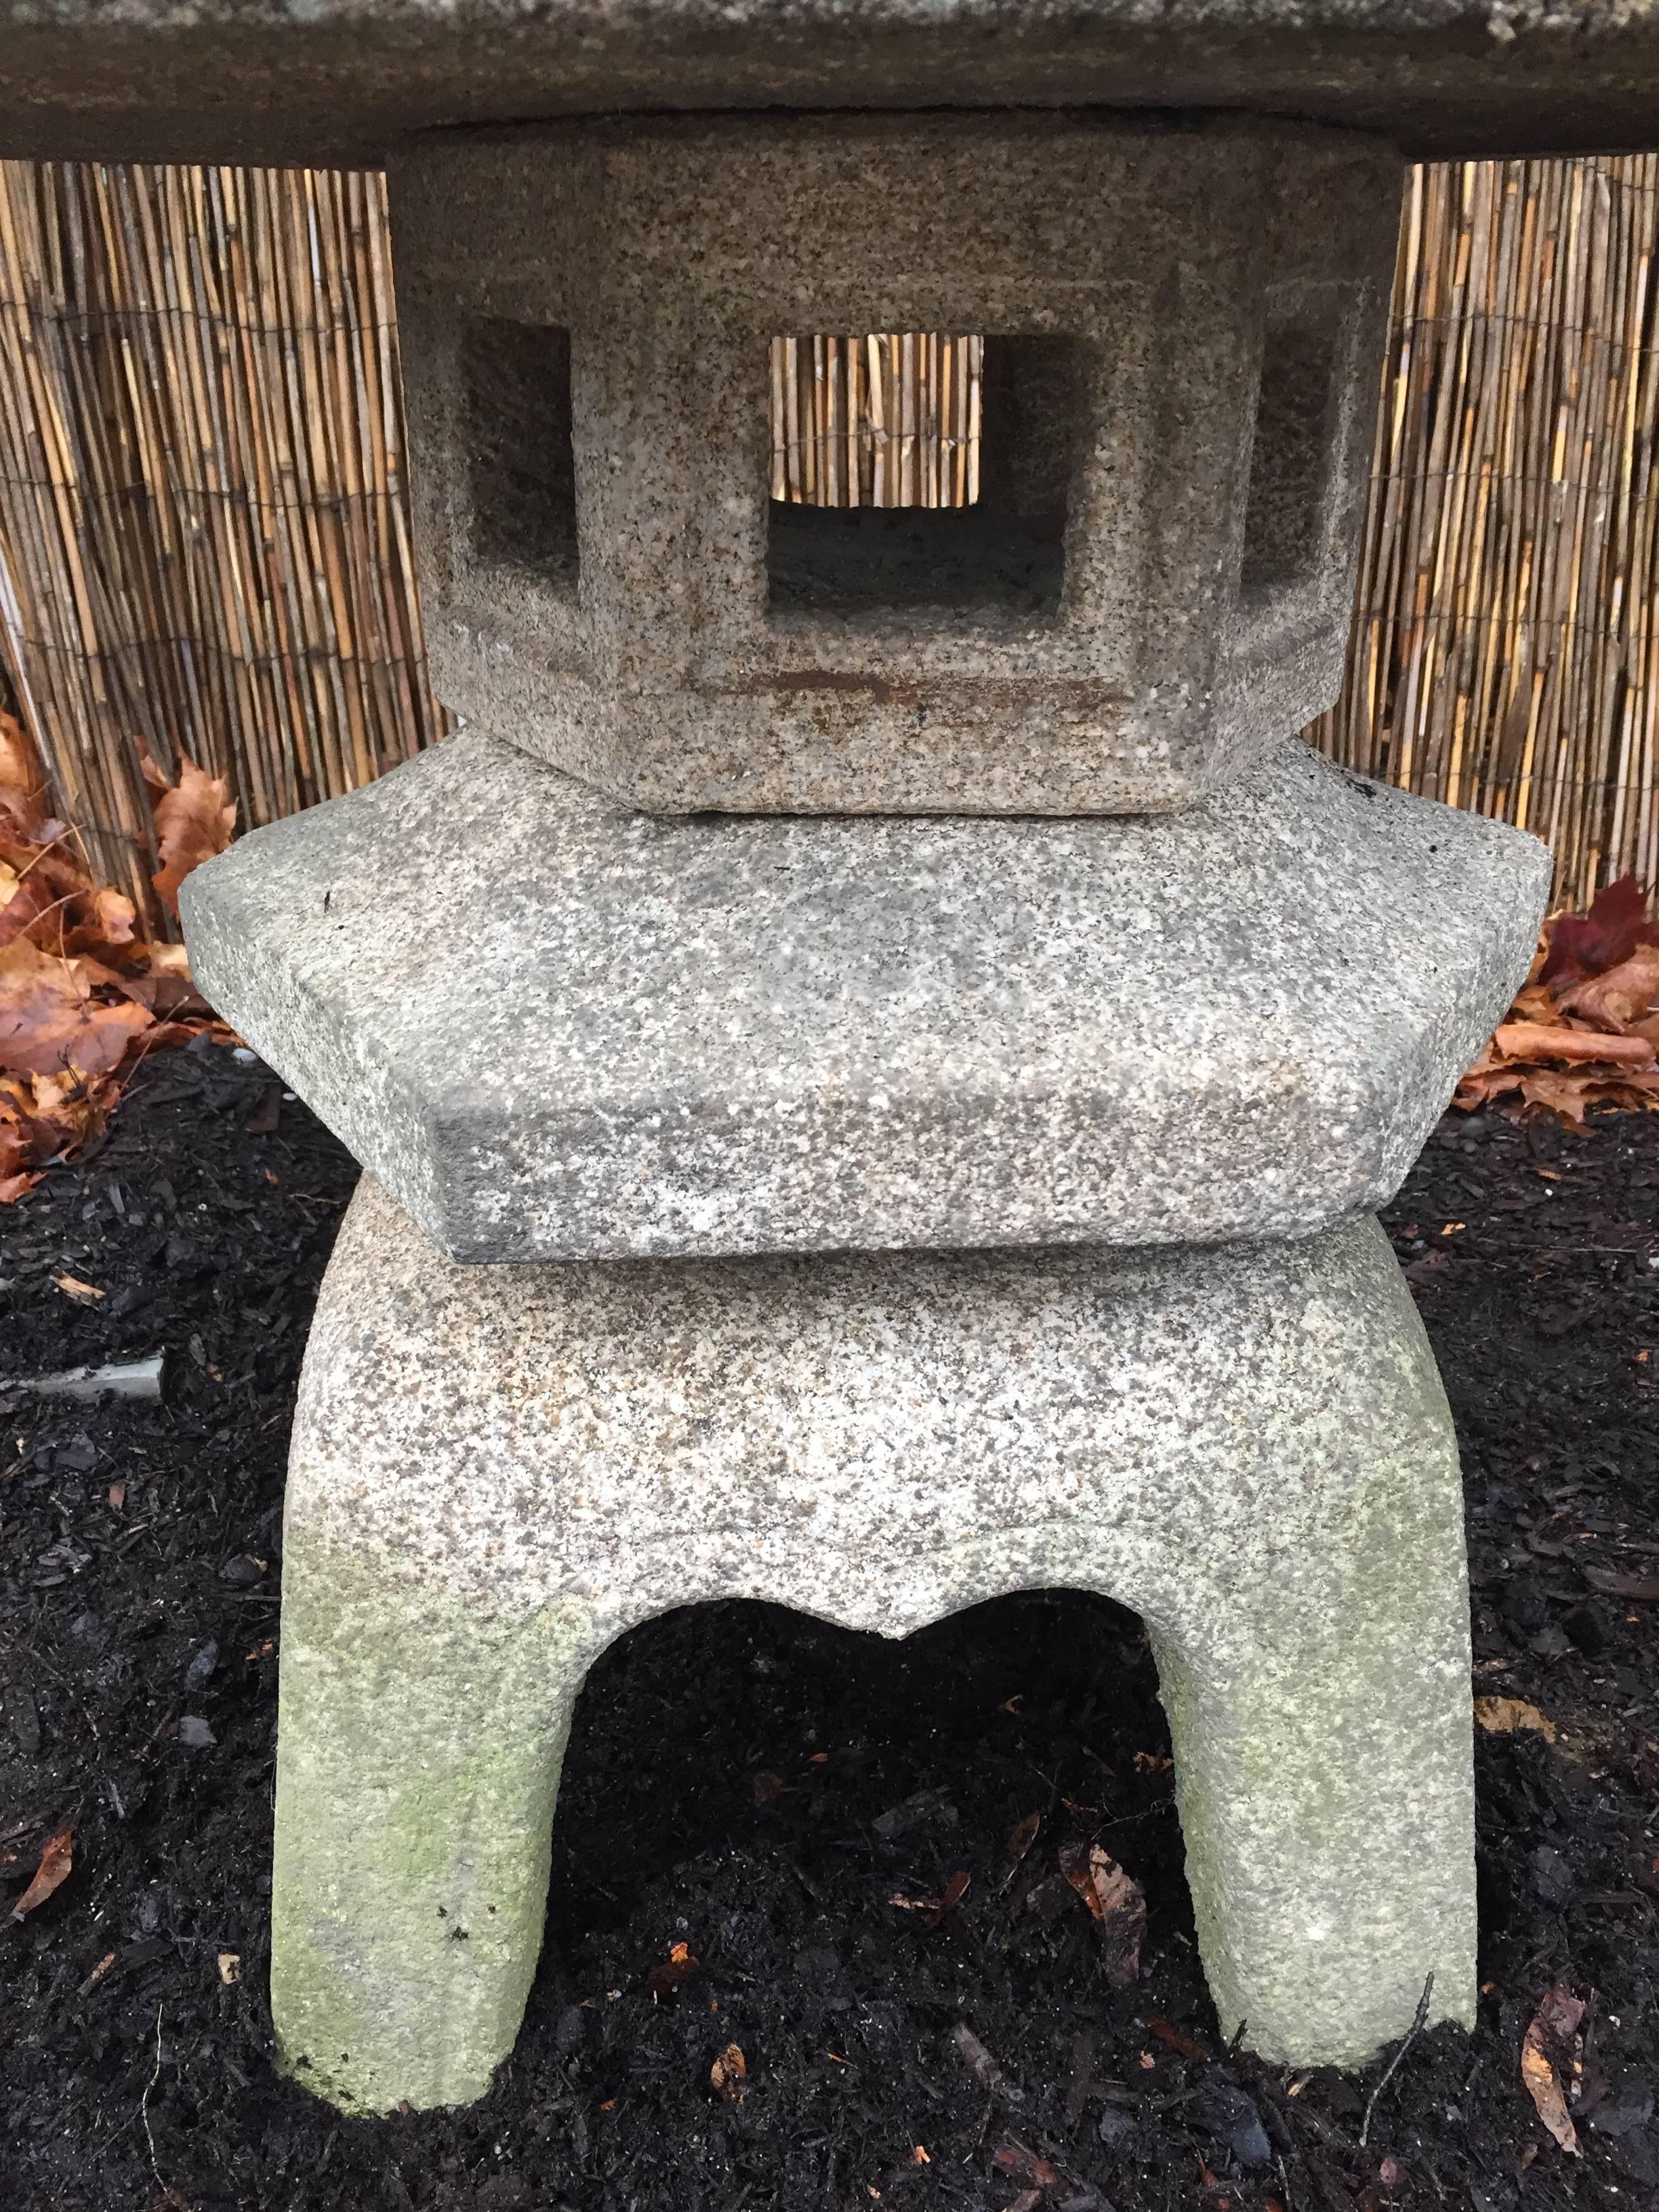 Japan “Yukimi” granite stone lantern (also known as a 